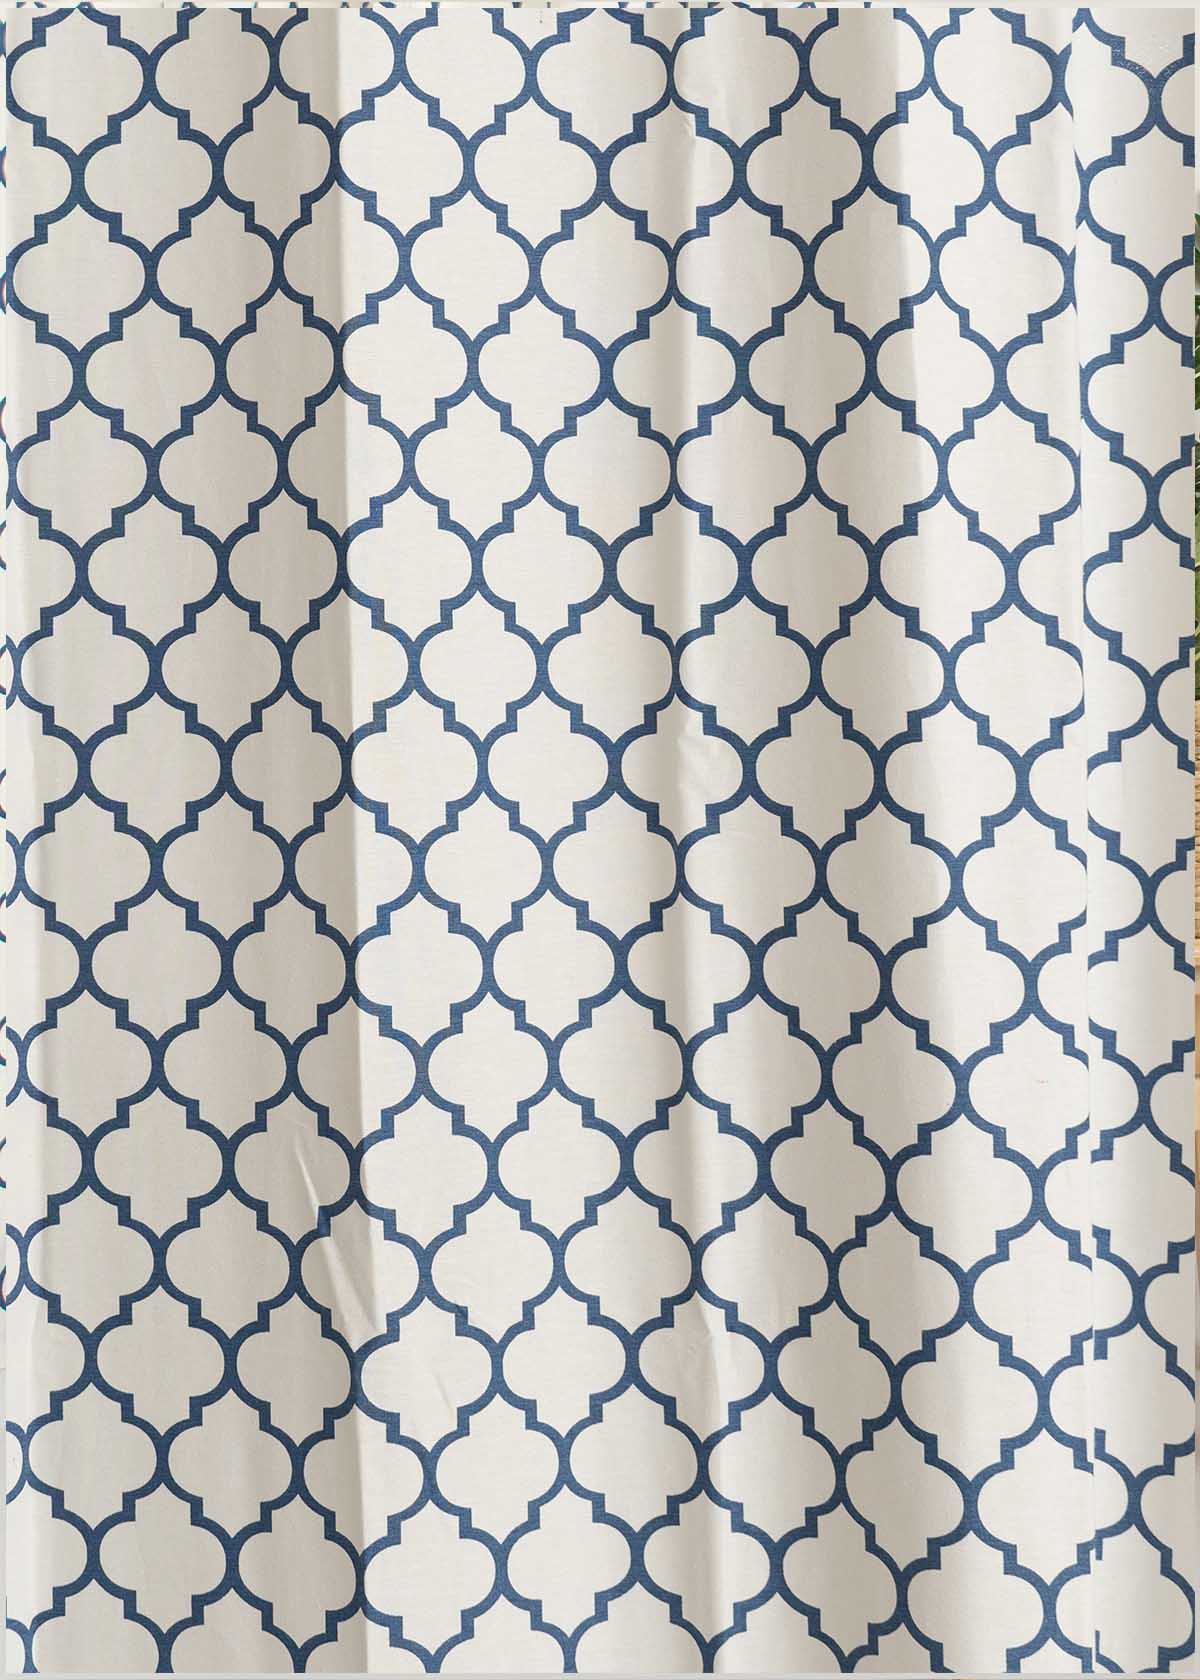 Trellis Printed 100% Customizable Cotton geometric curtain for bed room - Room darkening - Royal Blue